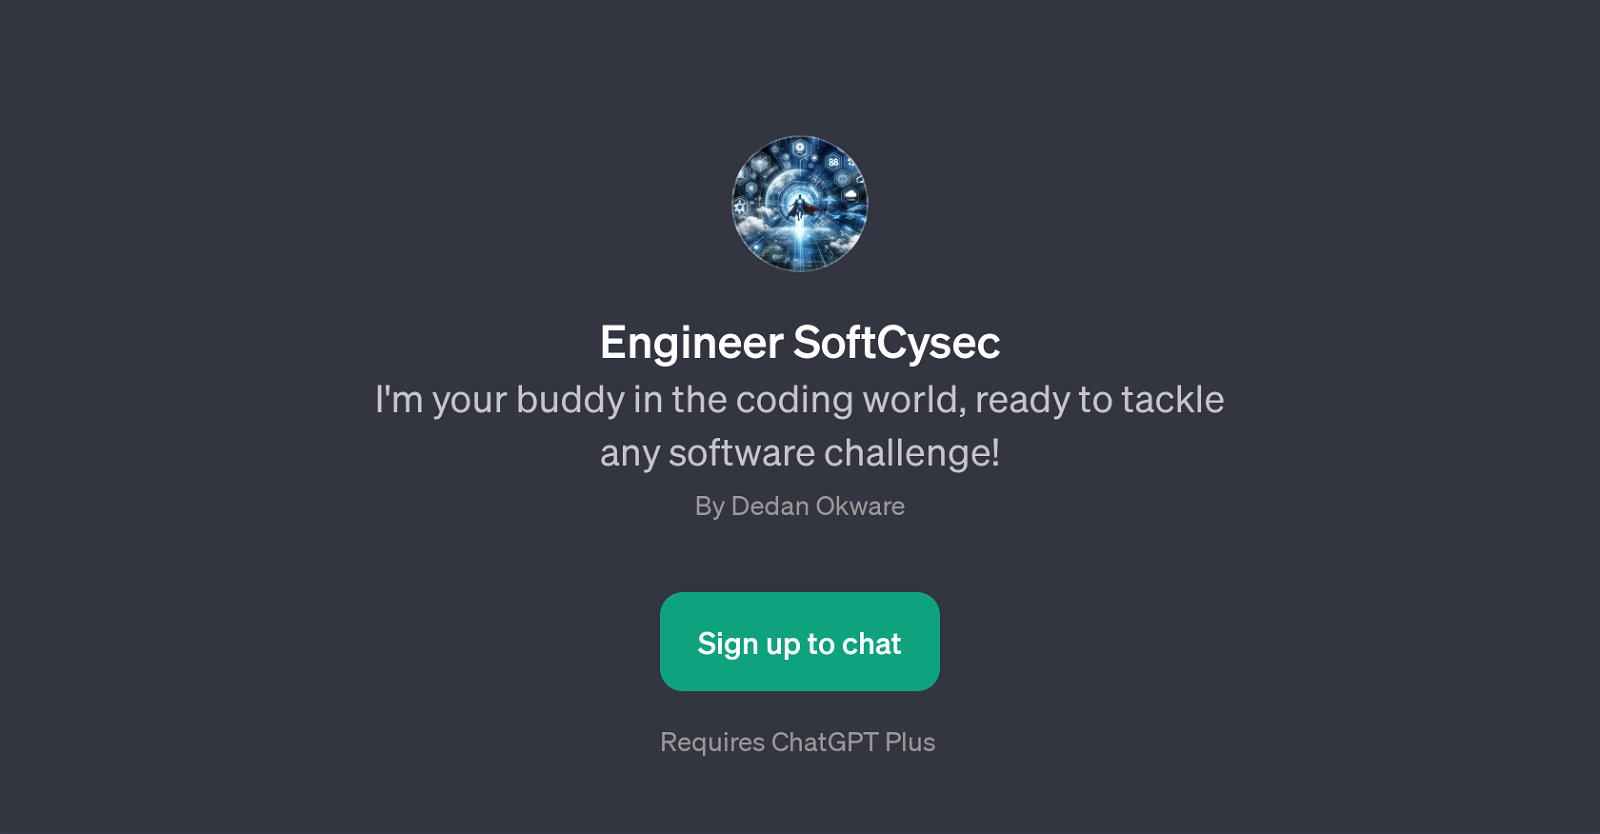 Engineer SoftCysec website